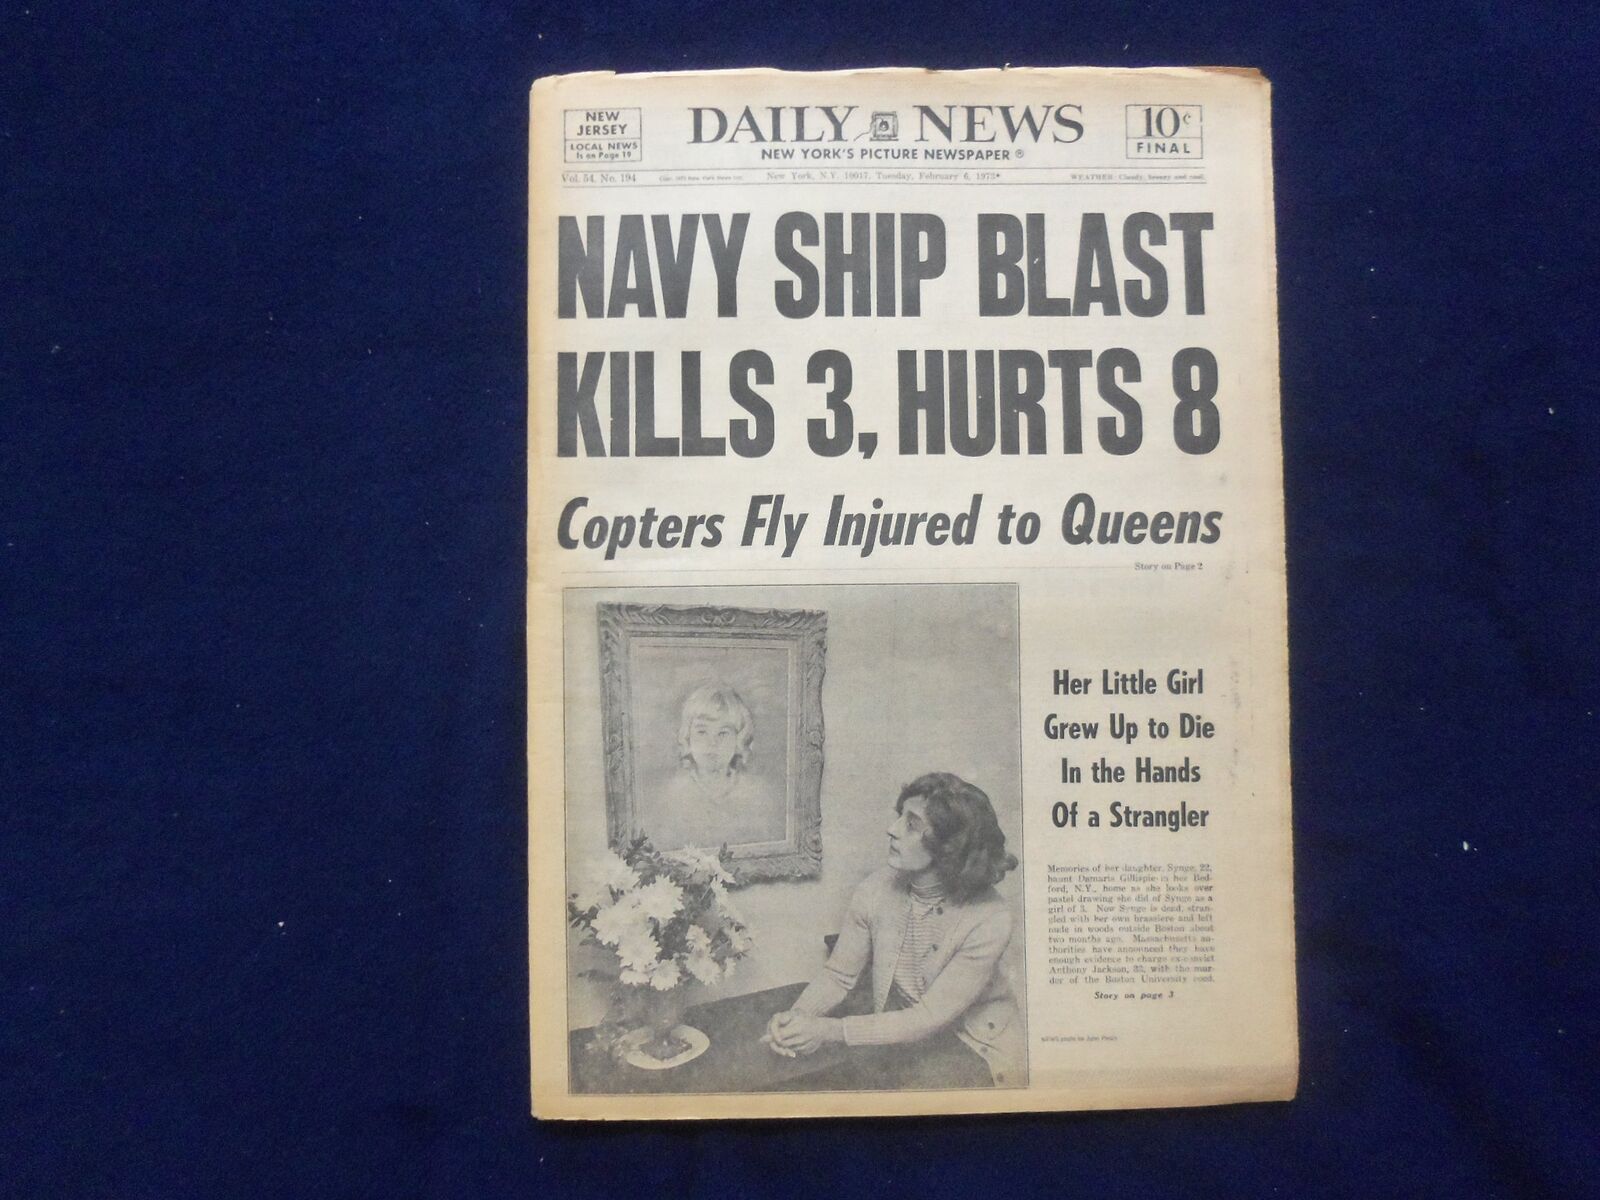 1973 FEB 6 NEW YORK DAILY NEWS NEWSPAPER - NAVY SHIP BLAST KILLS 3 - NP 6450